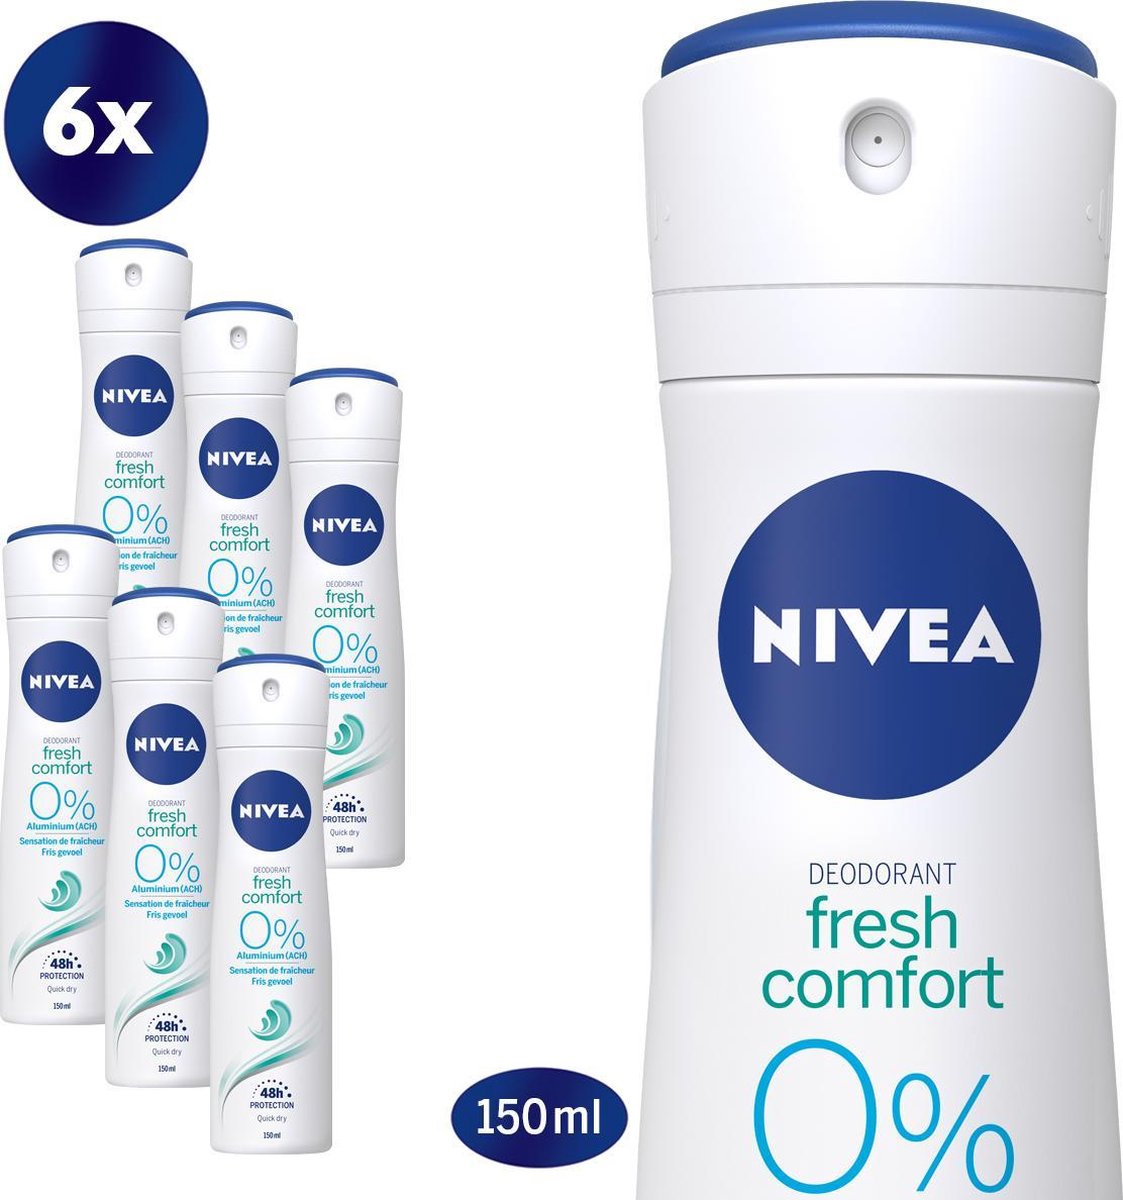 NIVEA Fresh Comfort Aluminium free - 6 x 150 ml - Deodorant Spray |